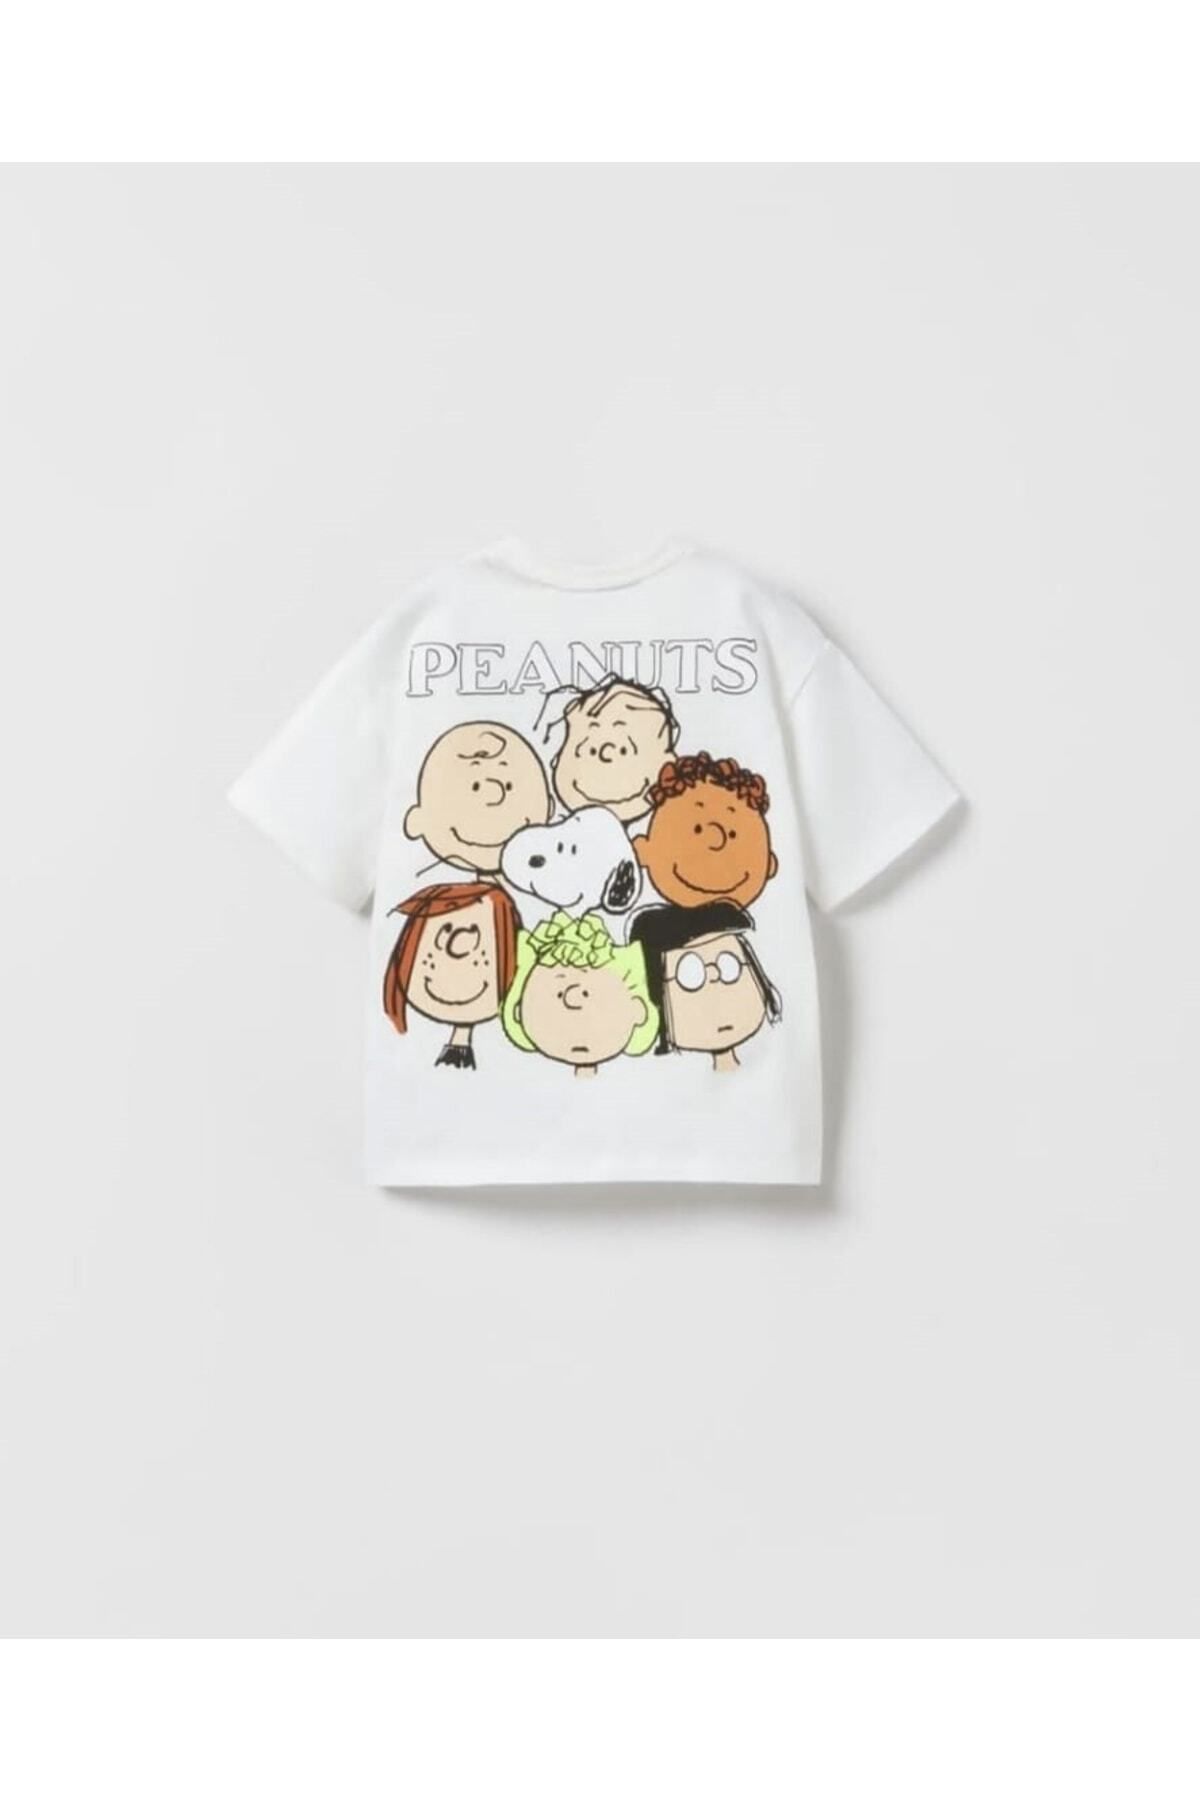 Argün kidss Snoopy Peanuts Baskılı Tshirt